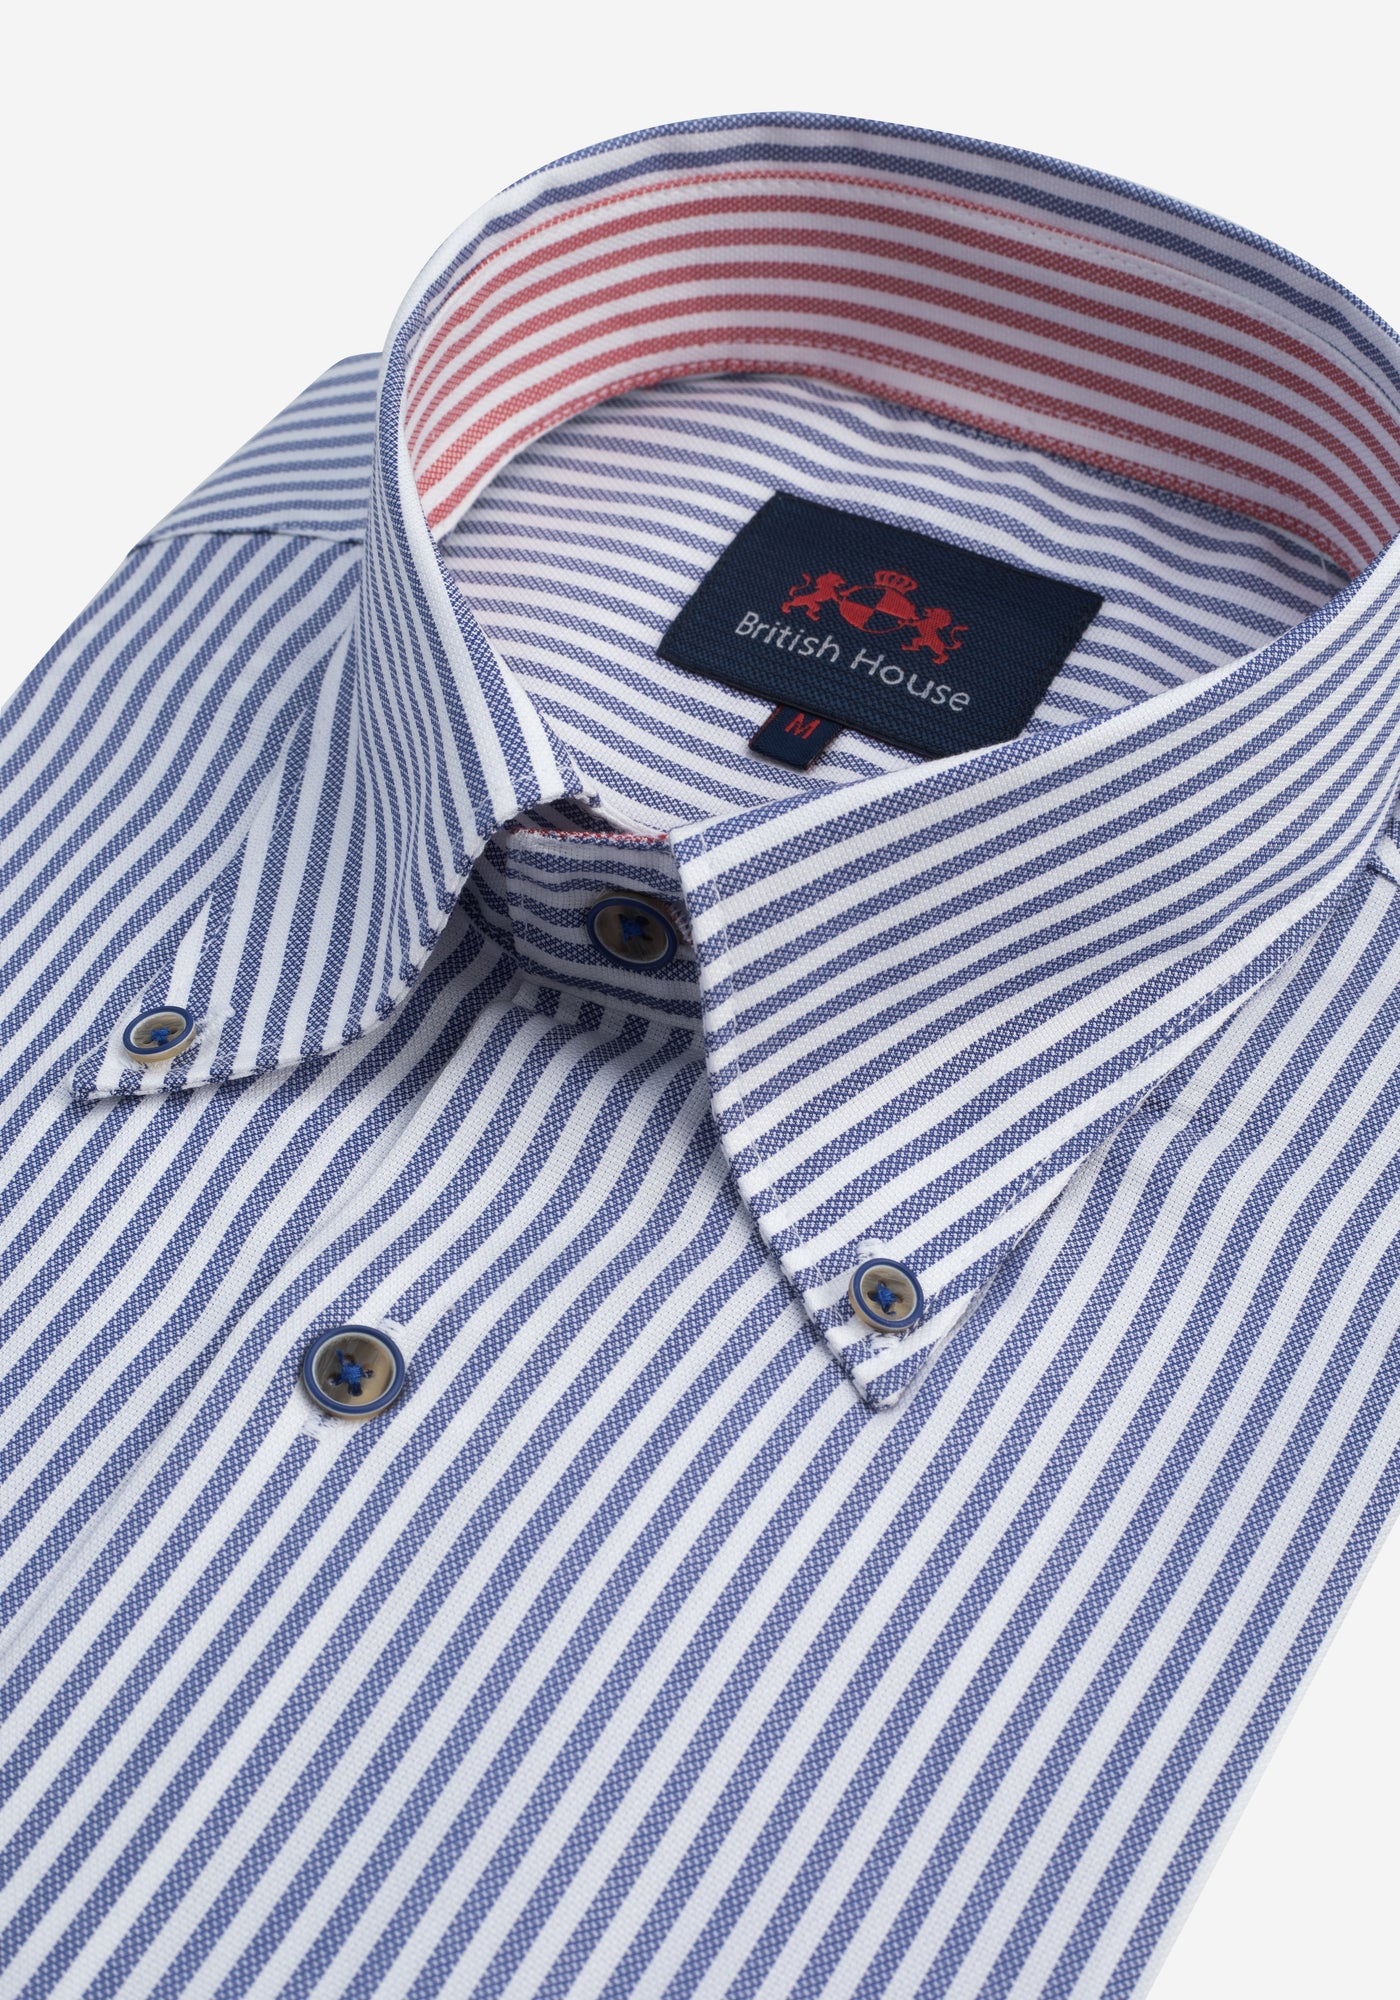 Twilight Blue Stripe Two-Ply Oxford Shirt